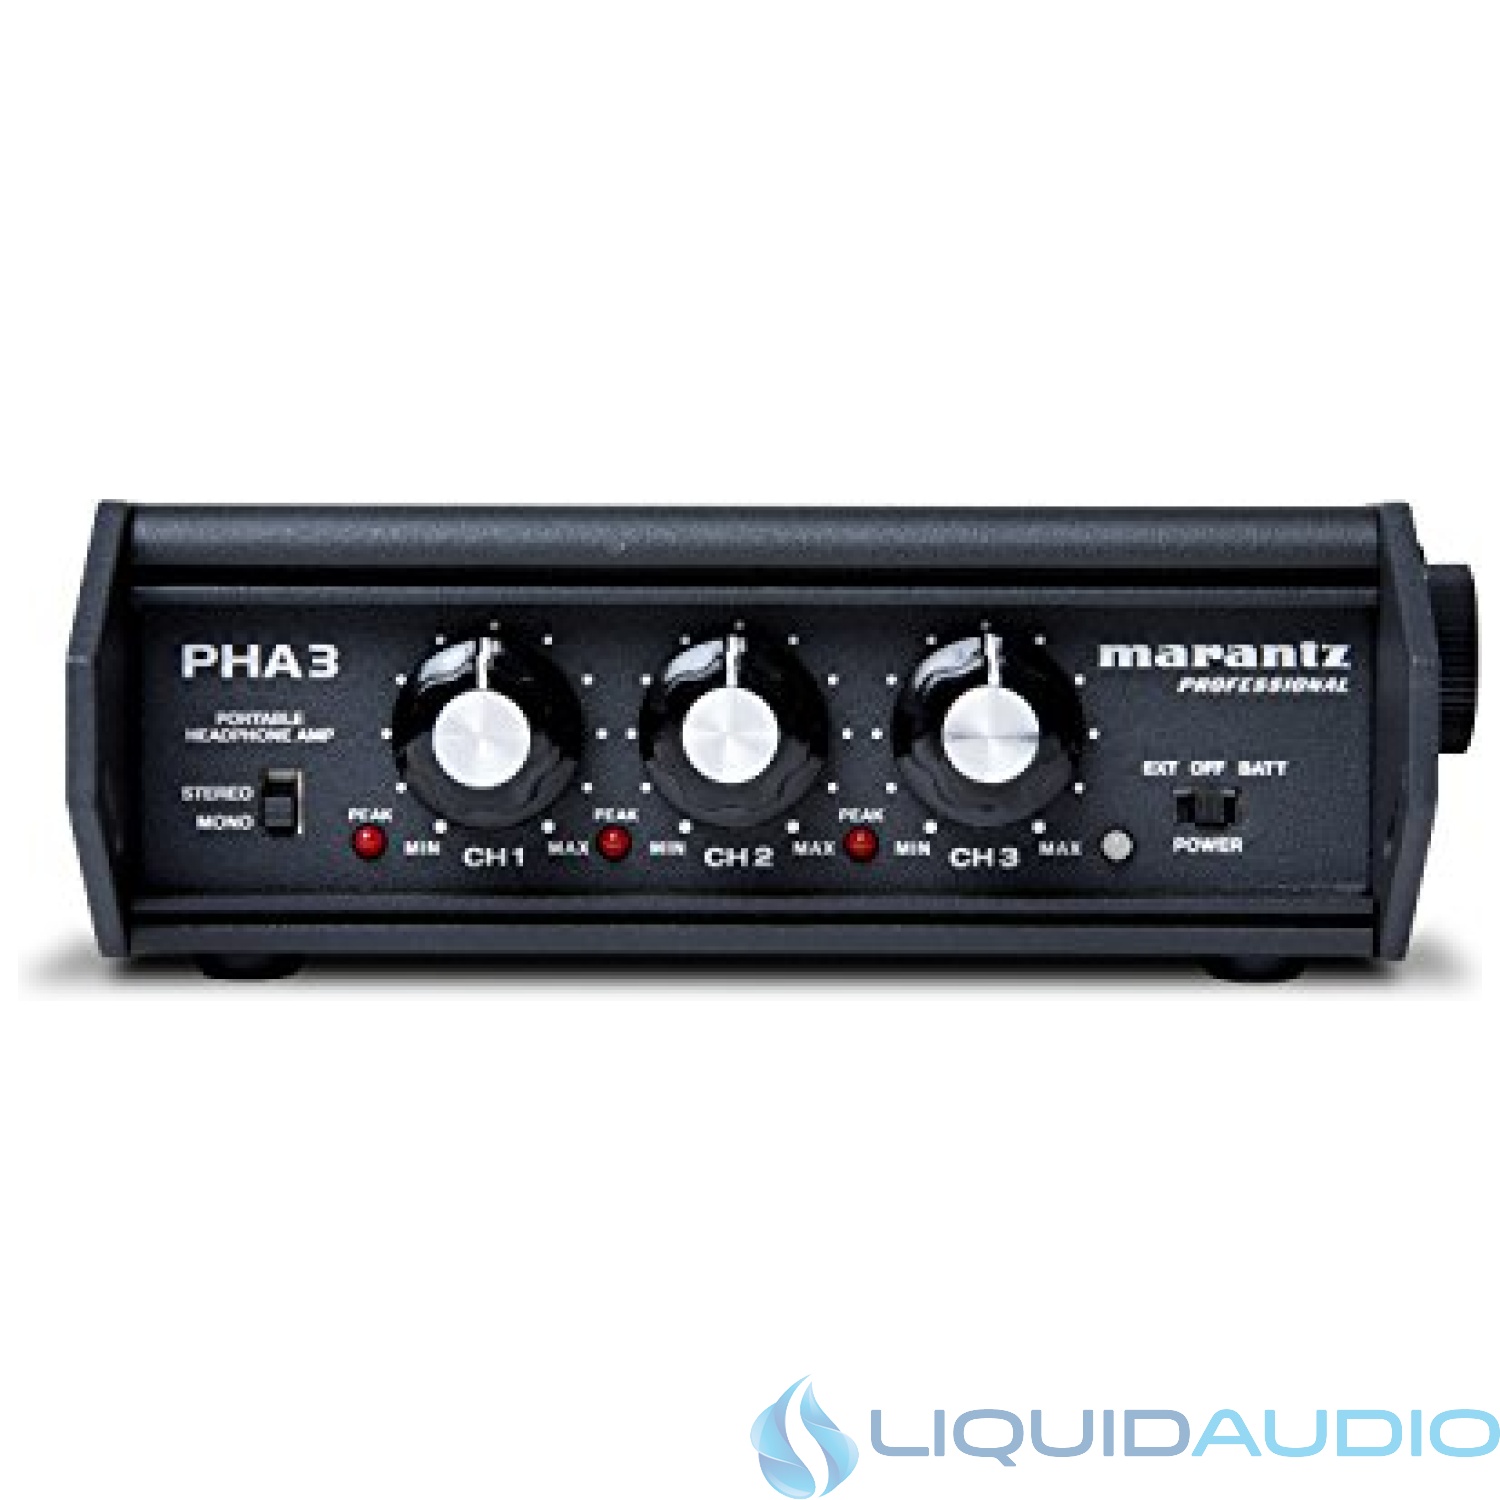 Marantz Professional PHA-3 | Stereo Field Production Headphone Amplifier with XLR, 1/4" & 1/8" Headphone Outputs